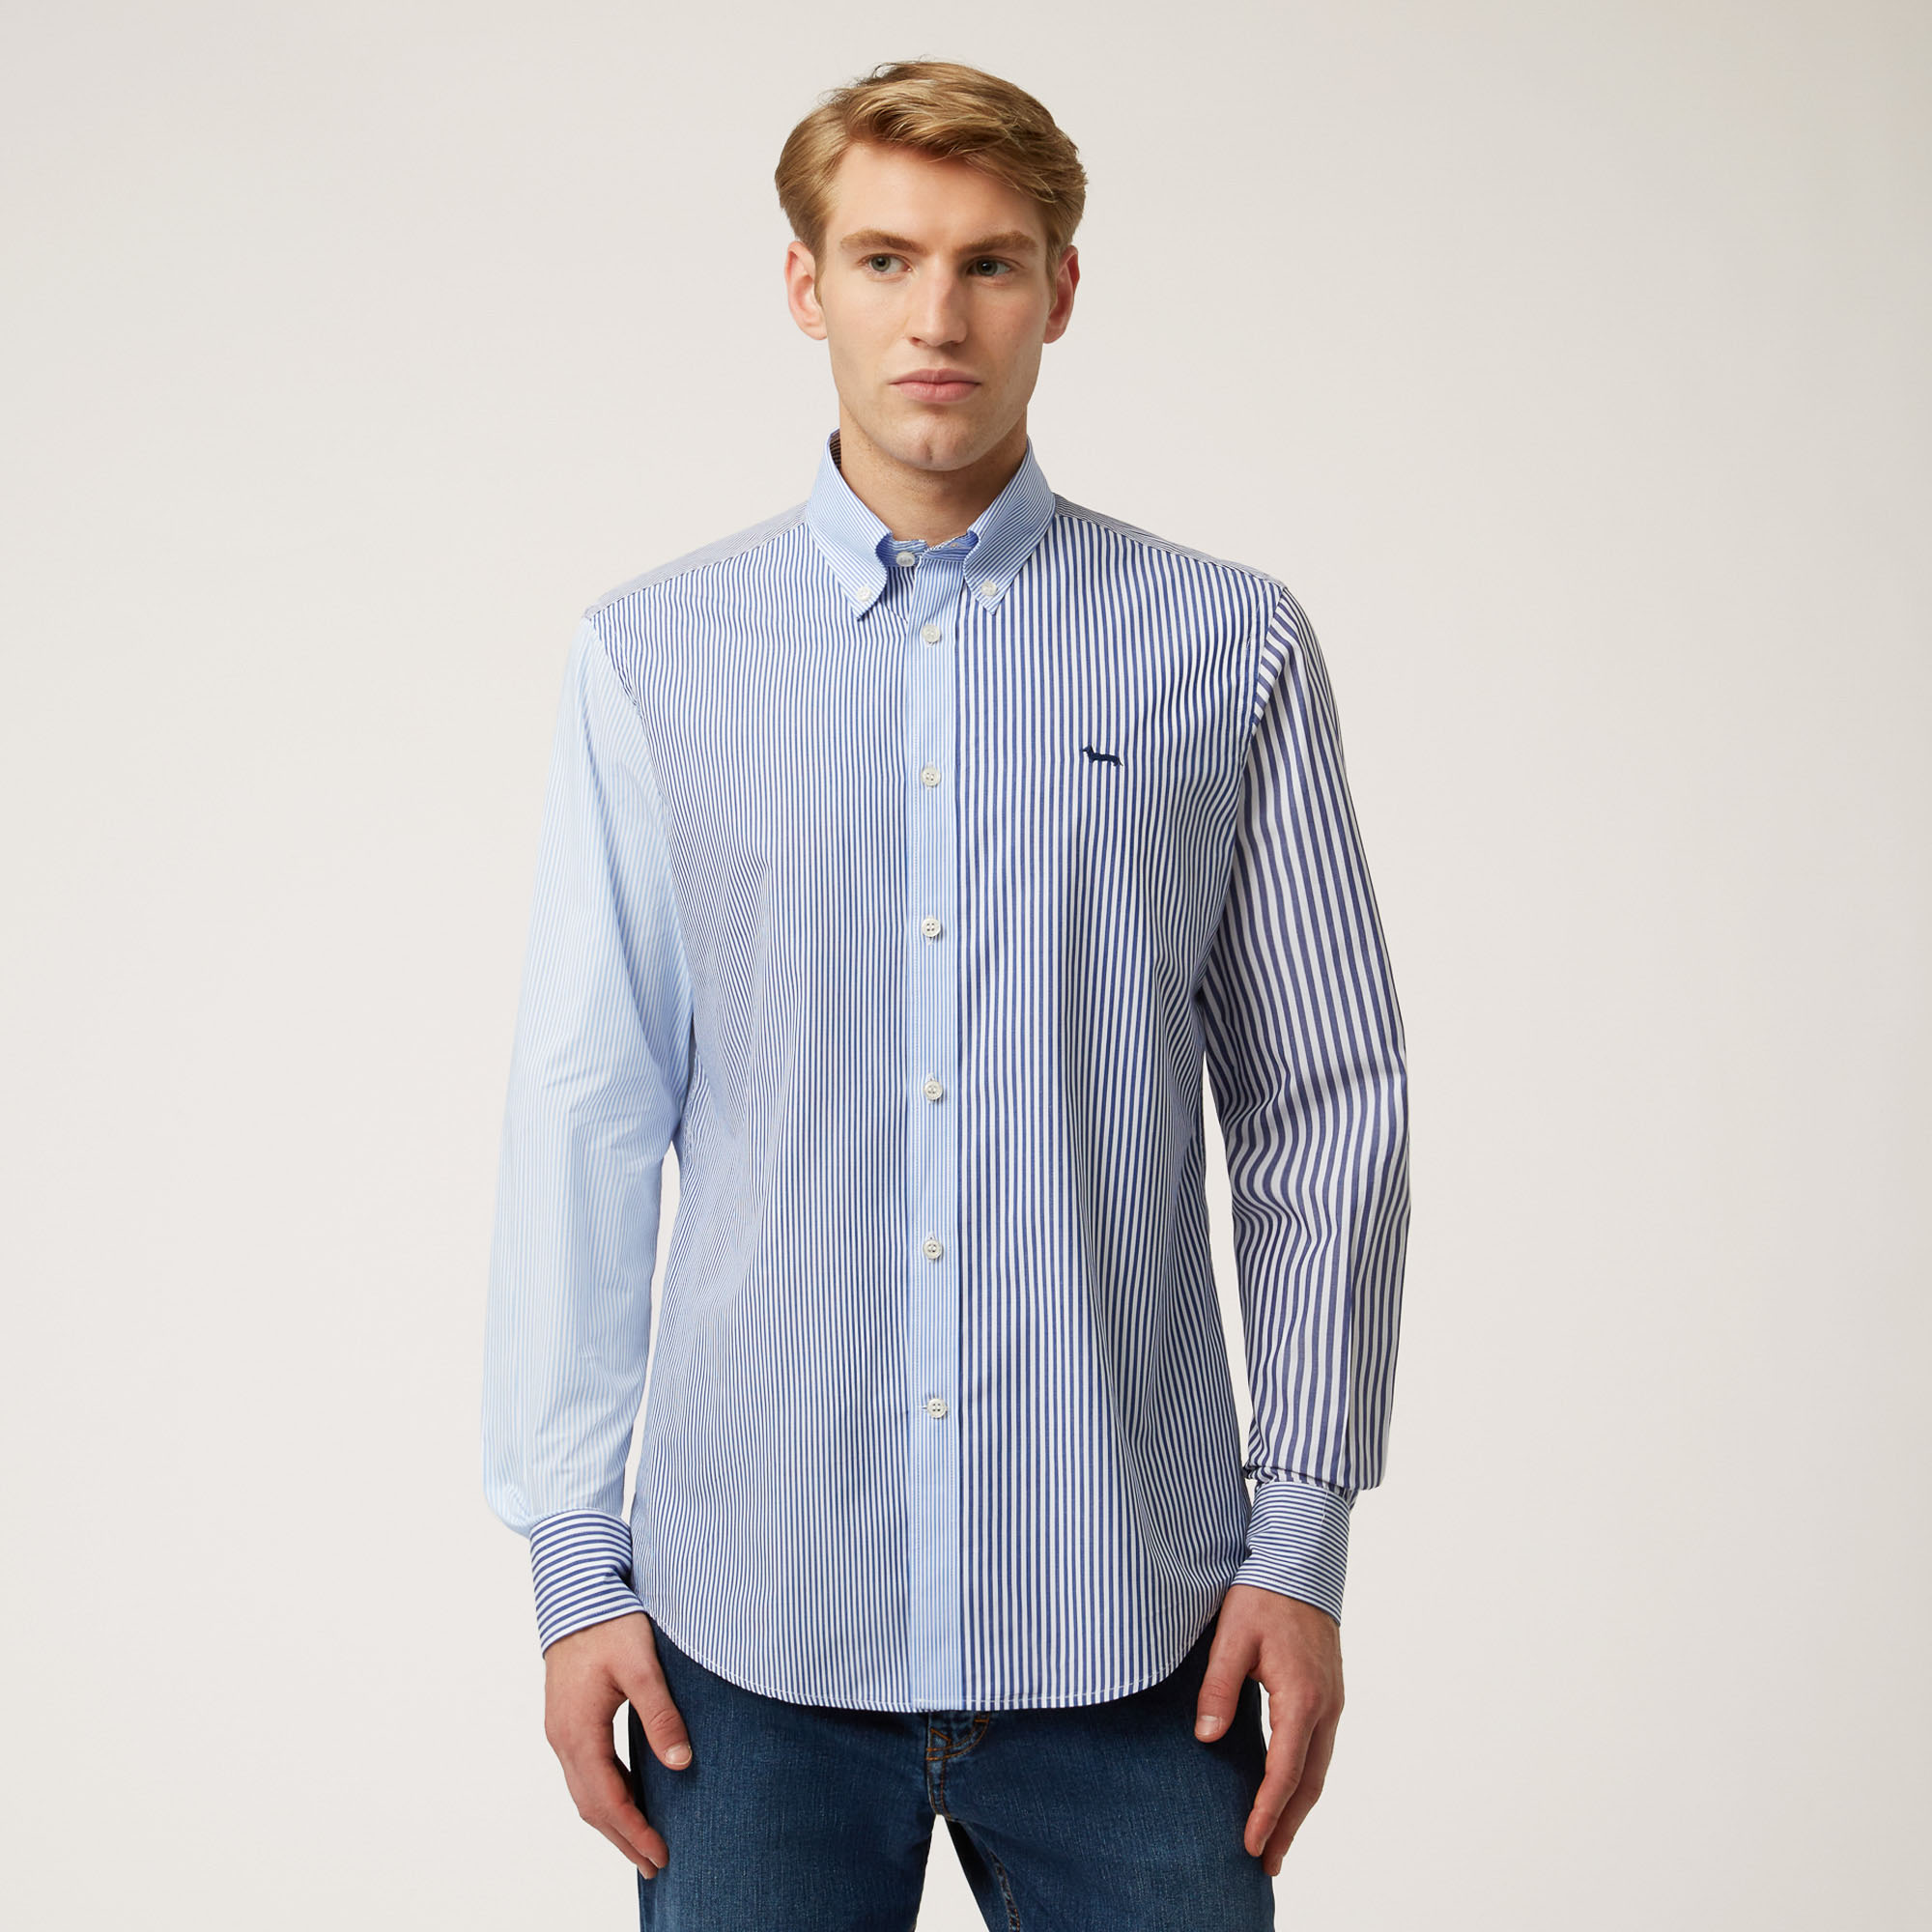 Mixed-Fabric Cotton Shirt, Blue, large